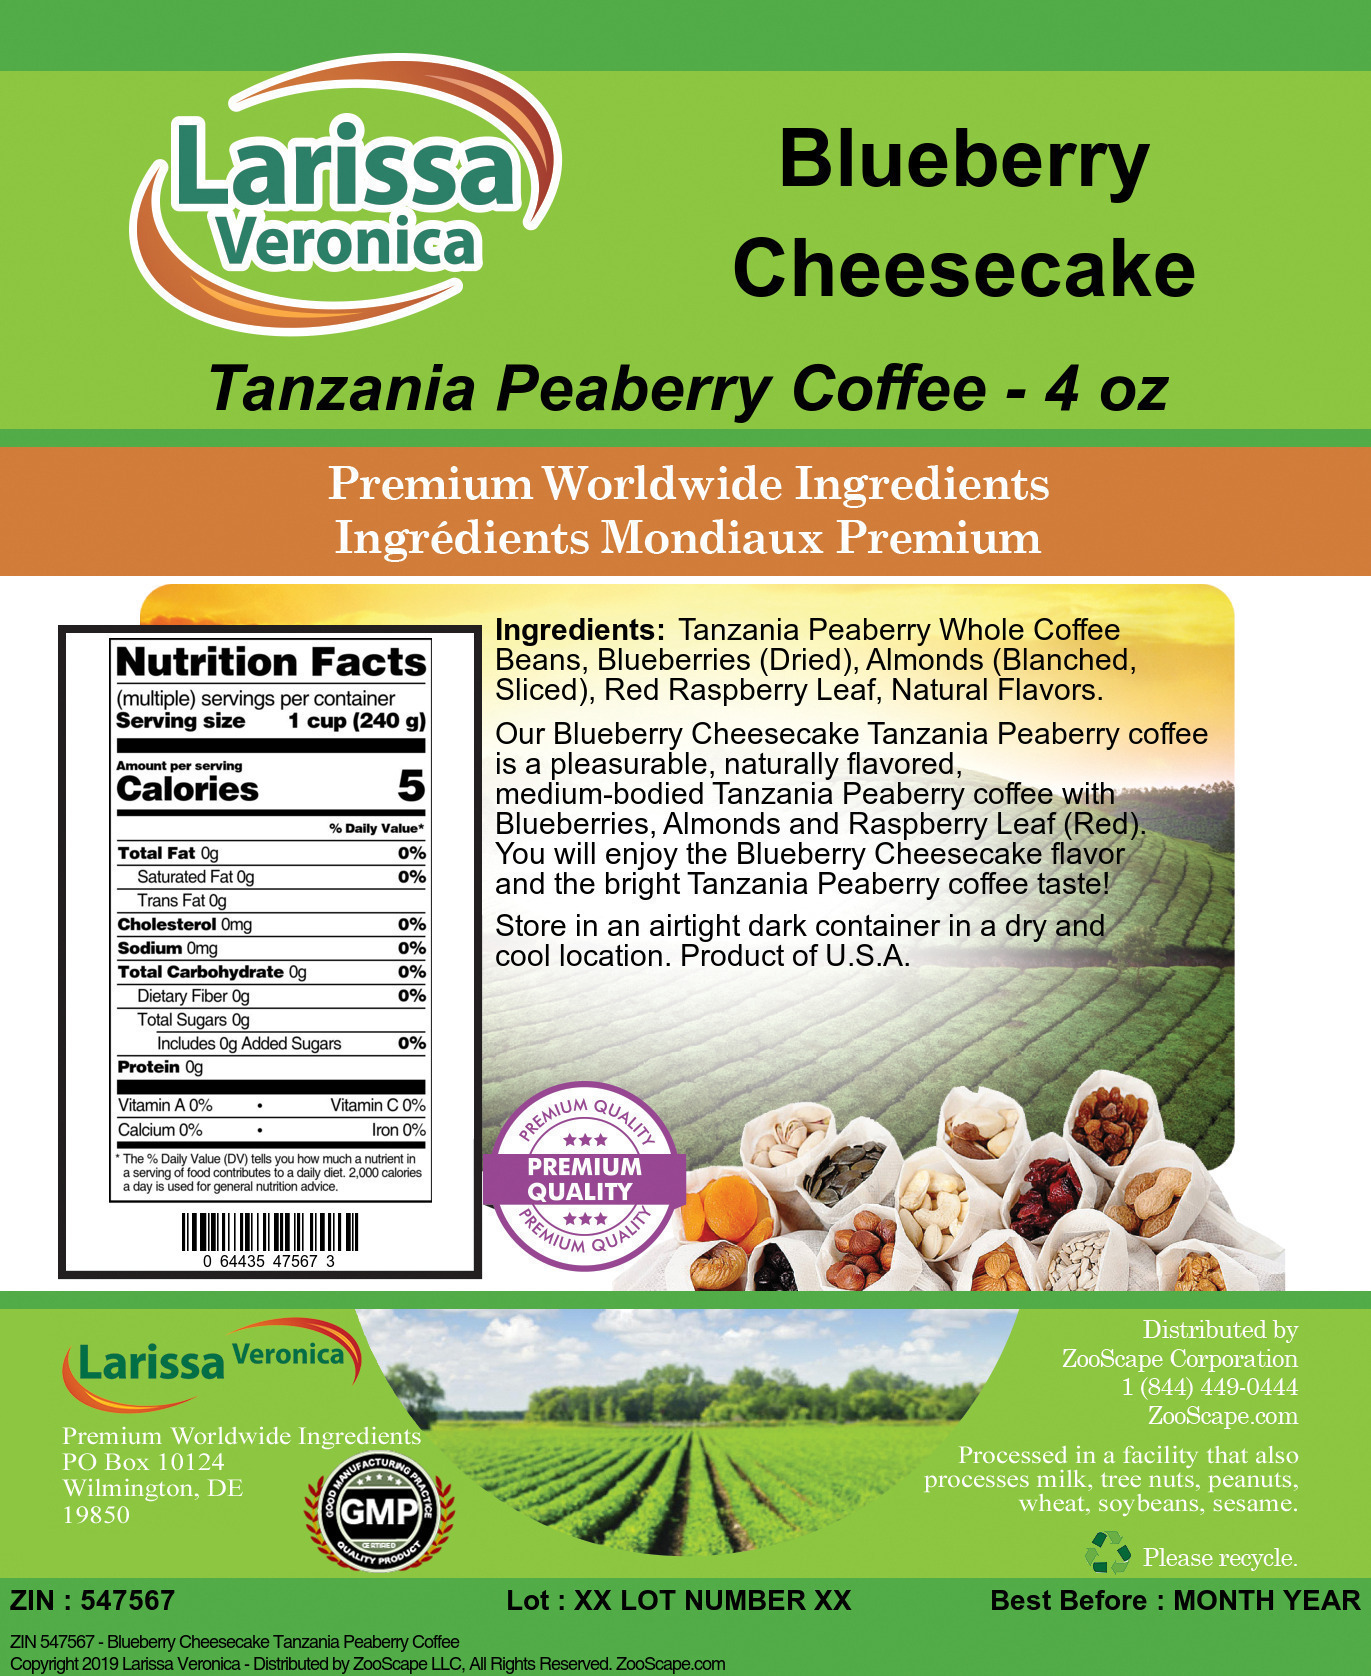 Blueberry Cheesecake Tanzania Peaberry Coffee - Label